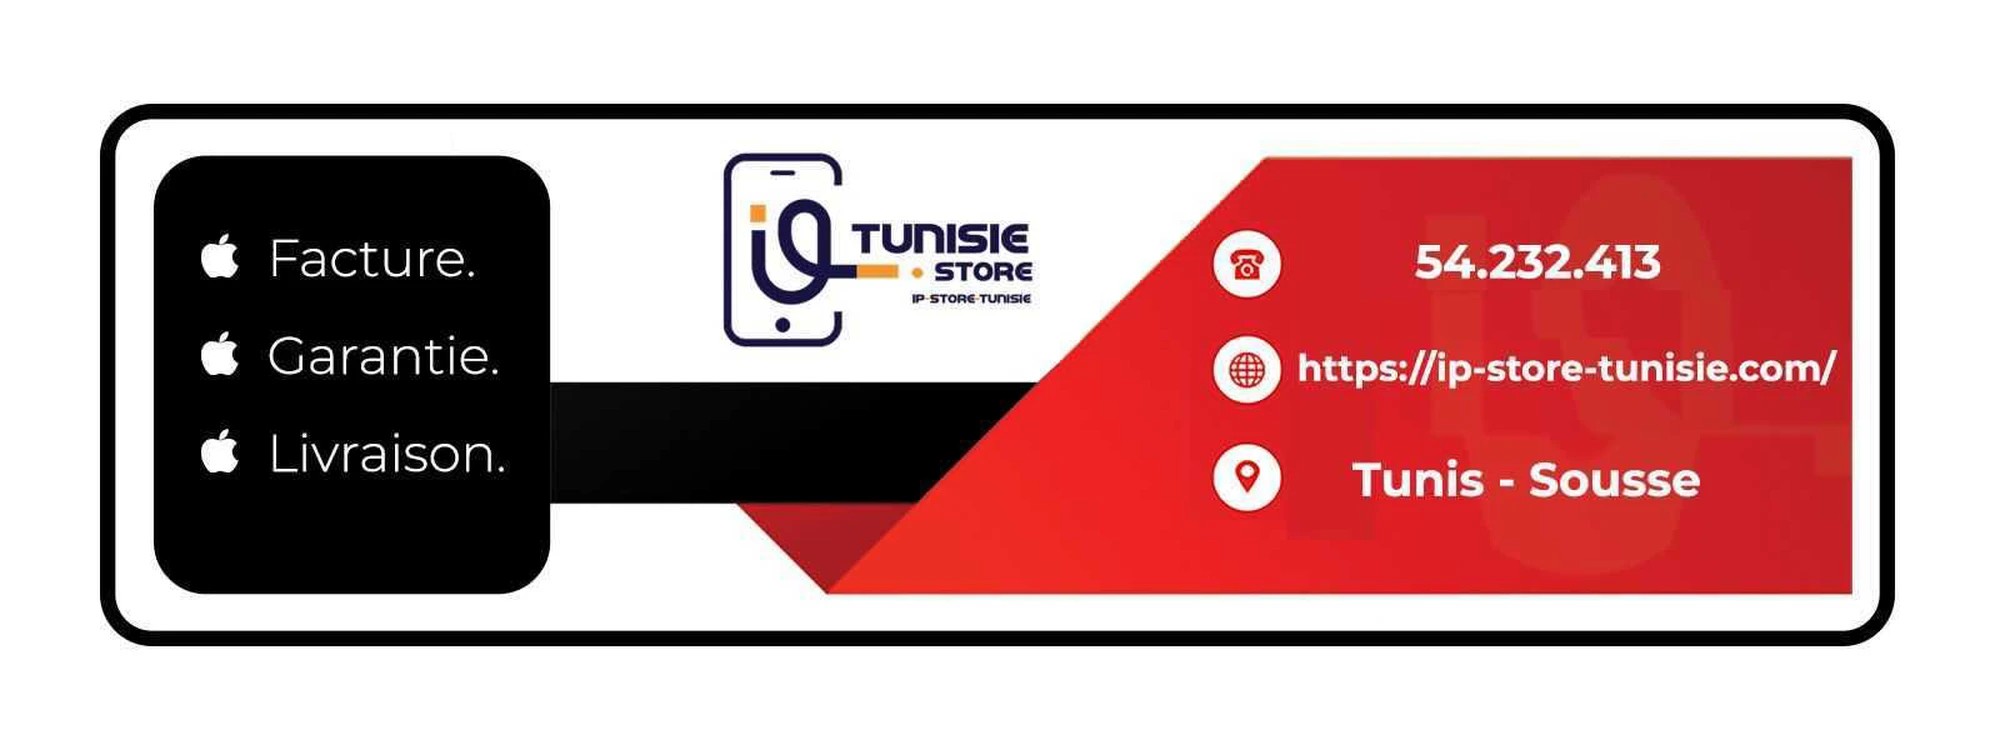 tayara shop cover of STORE TUNISIE 